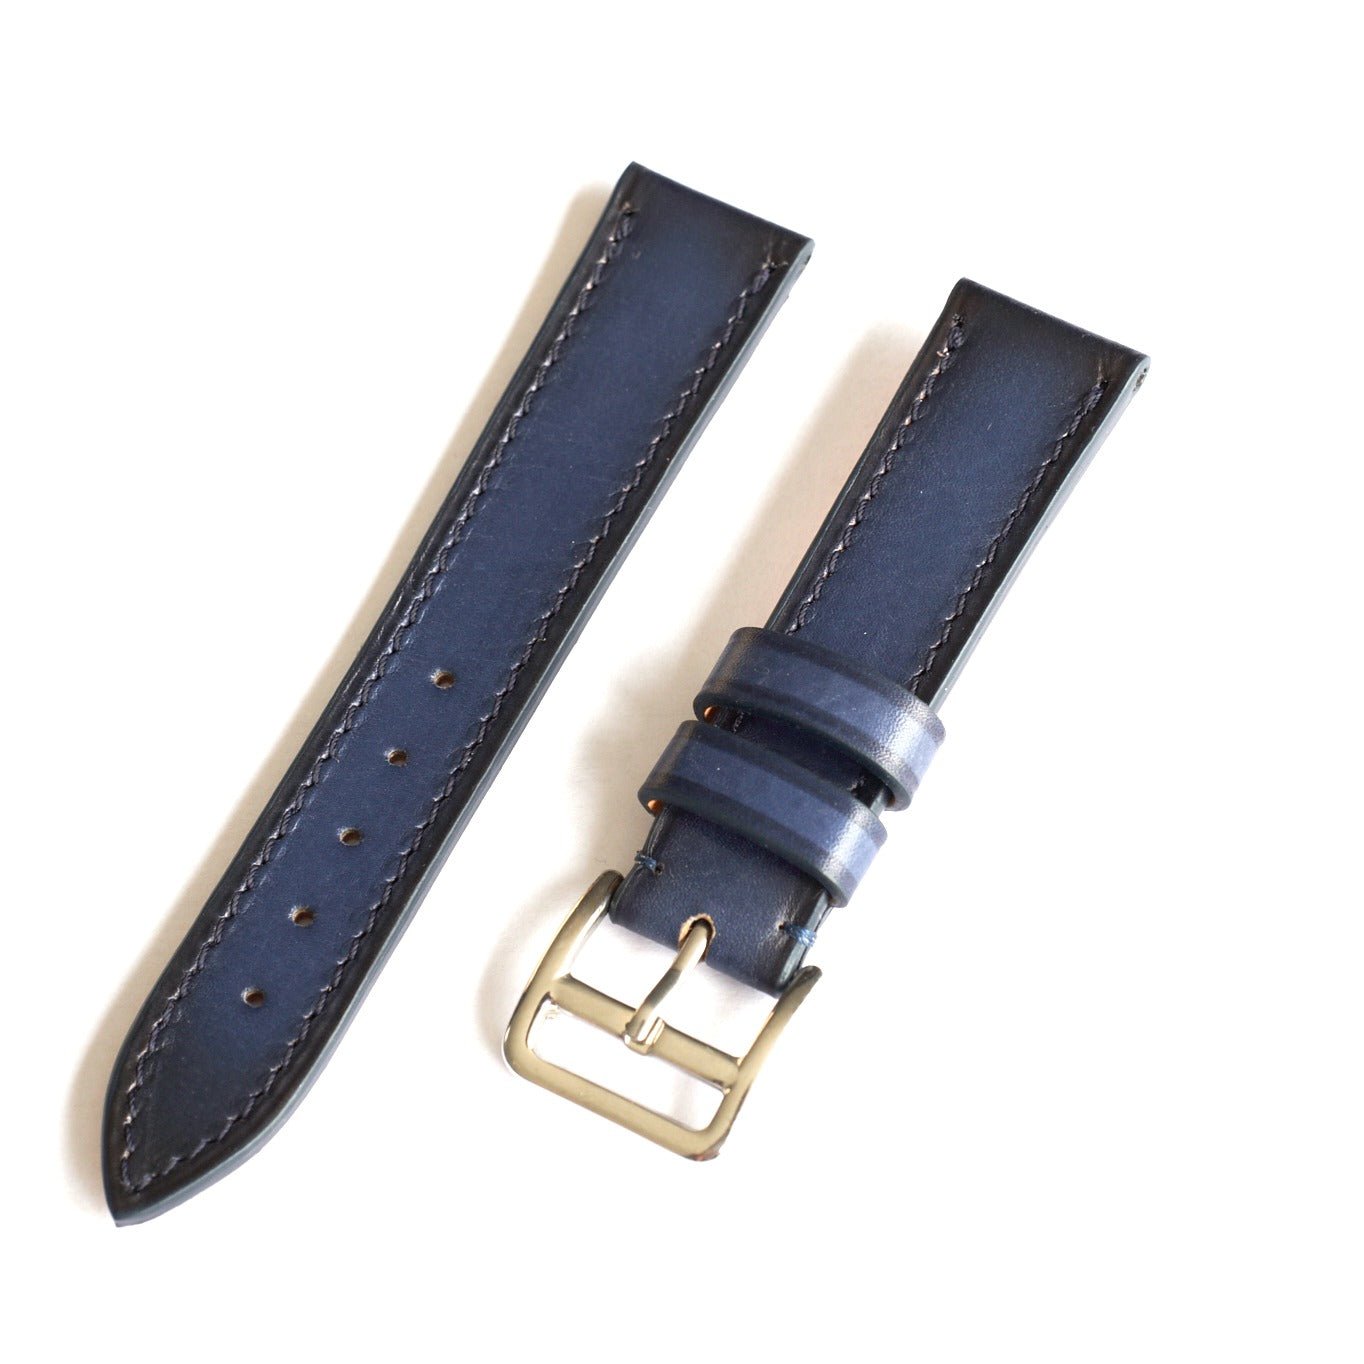 Bracelet patine mains bleu marine - Atelier romane